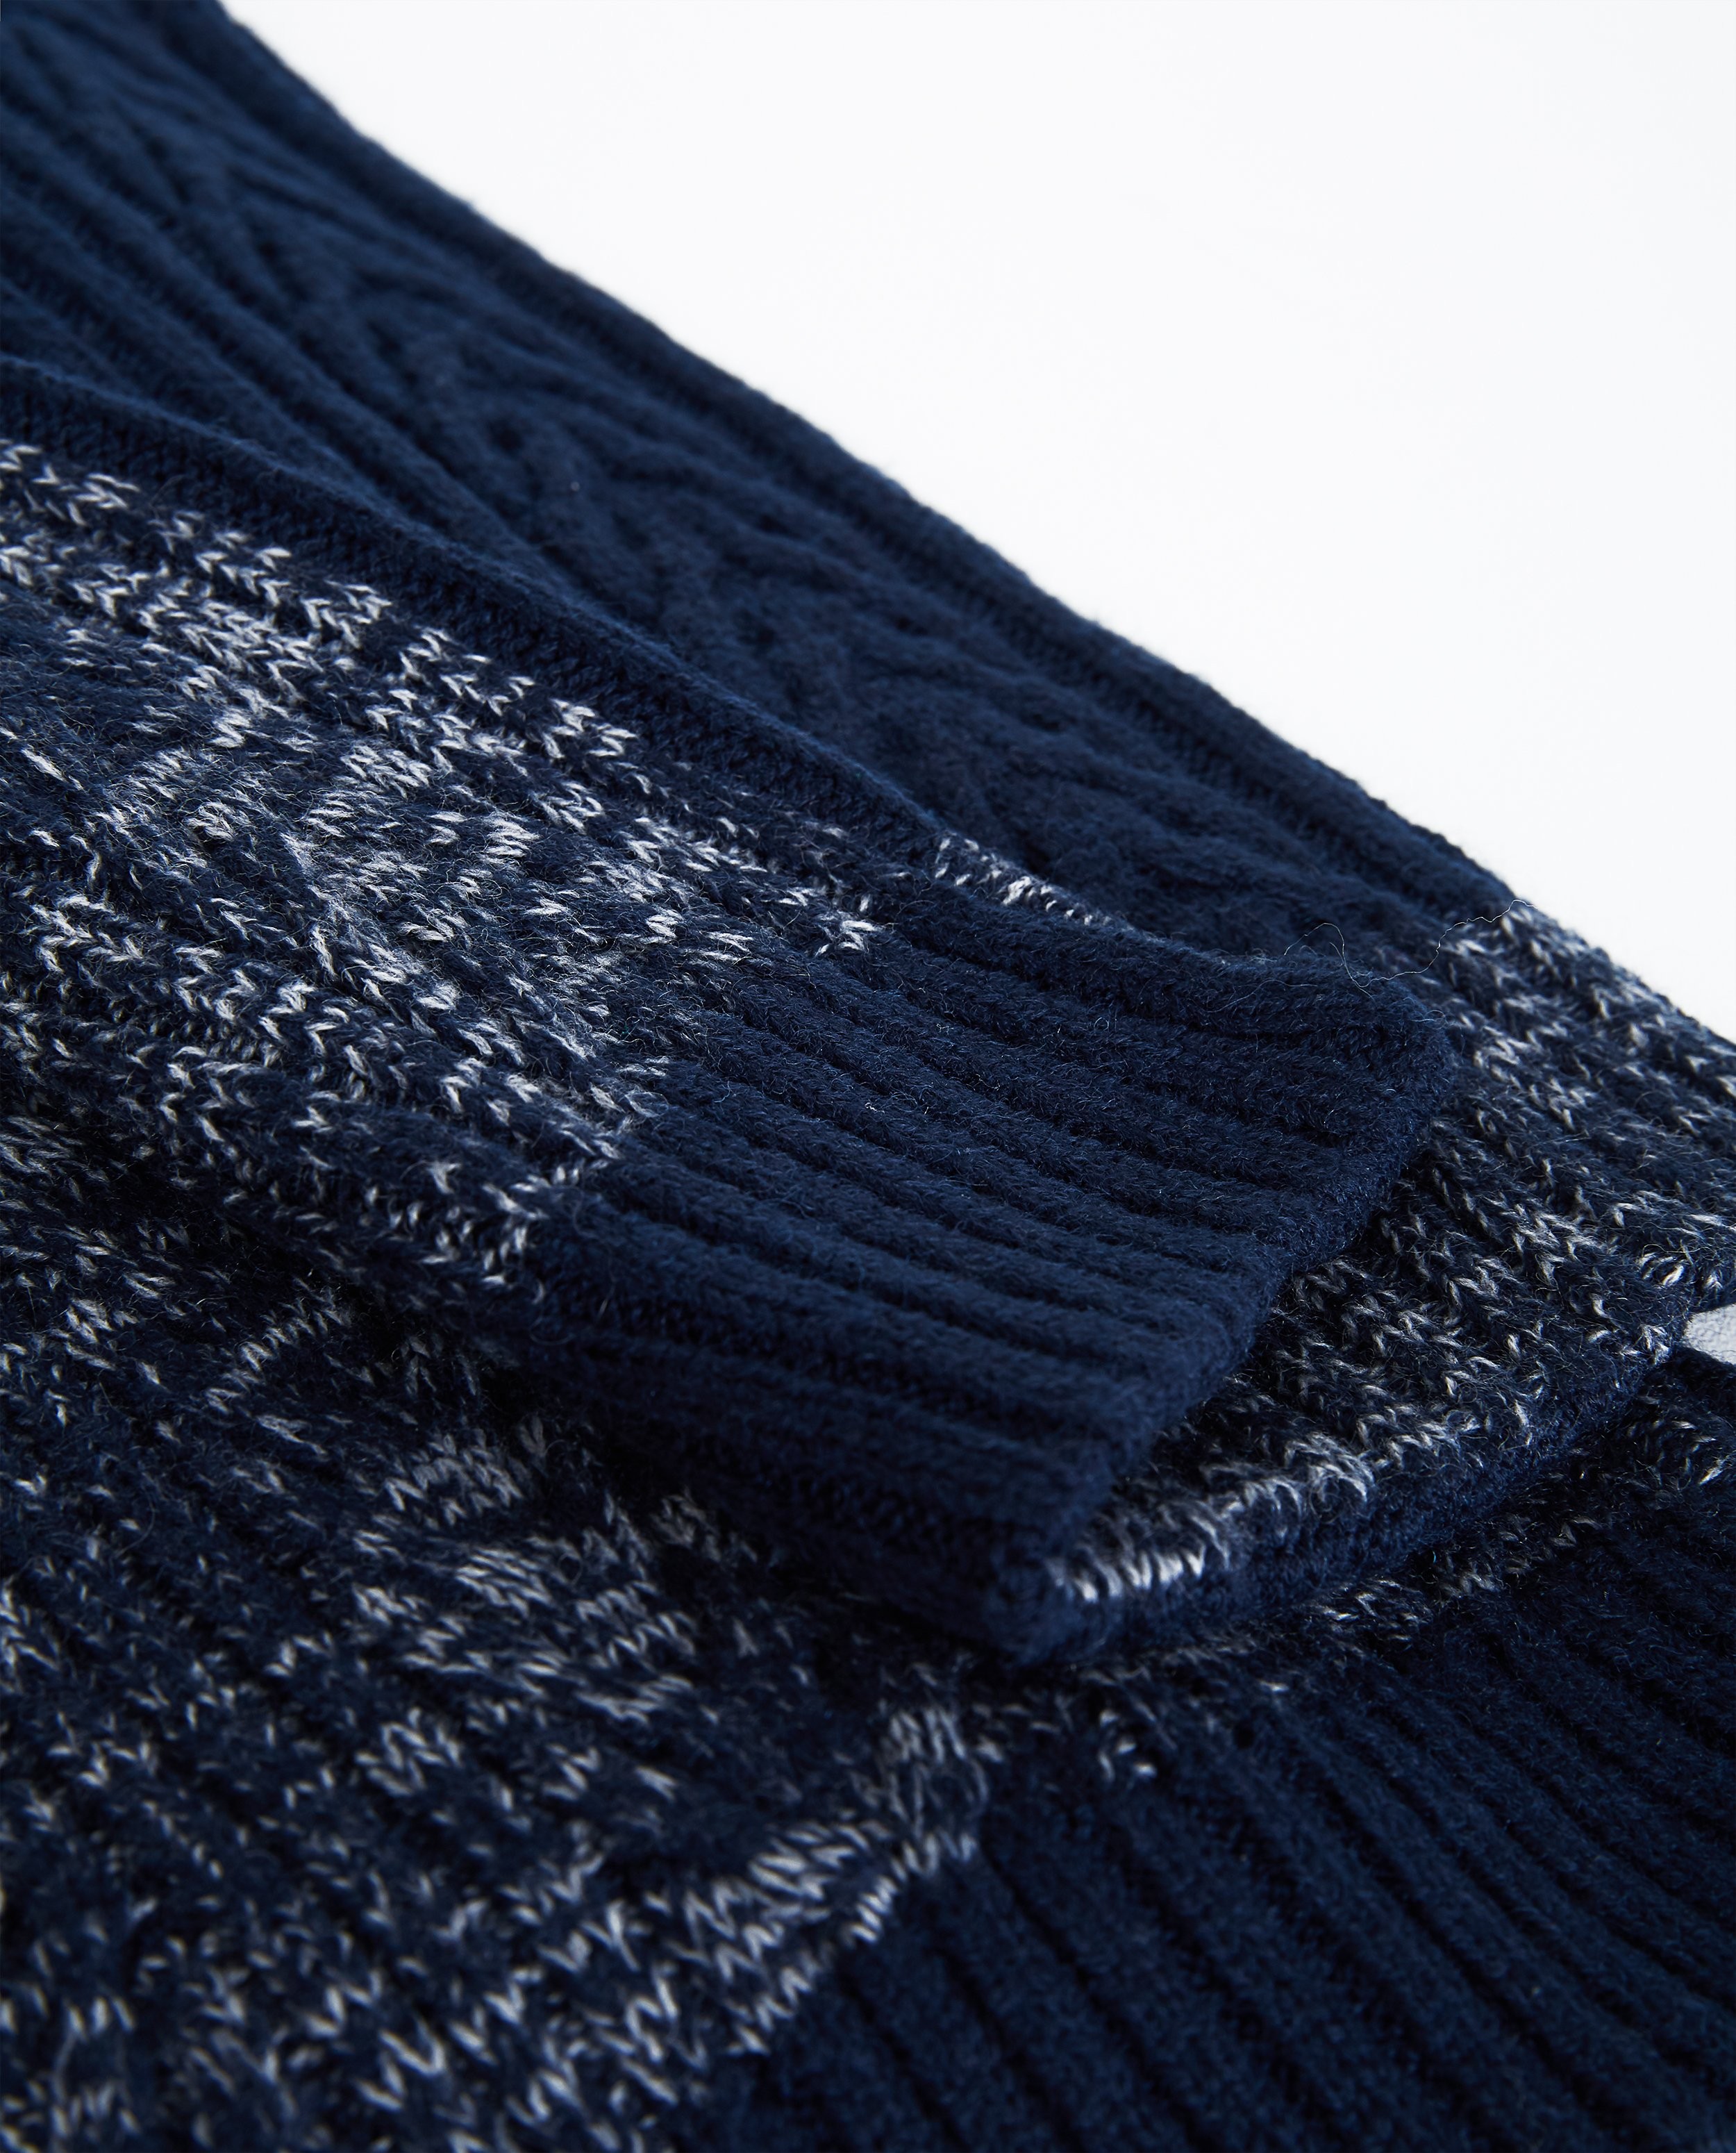 Breigoed - Donkerblauwe sjaal